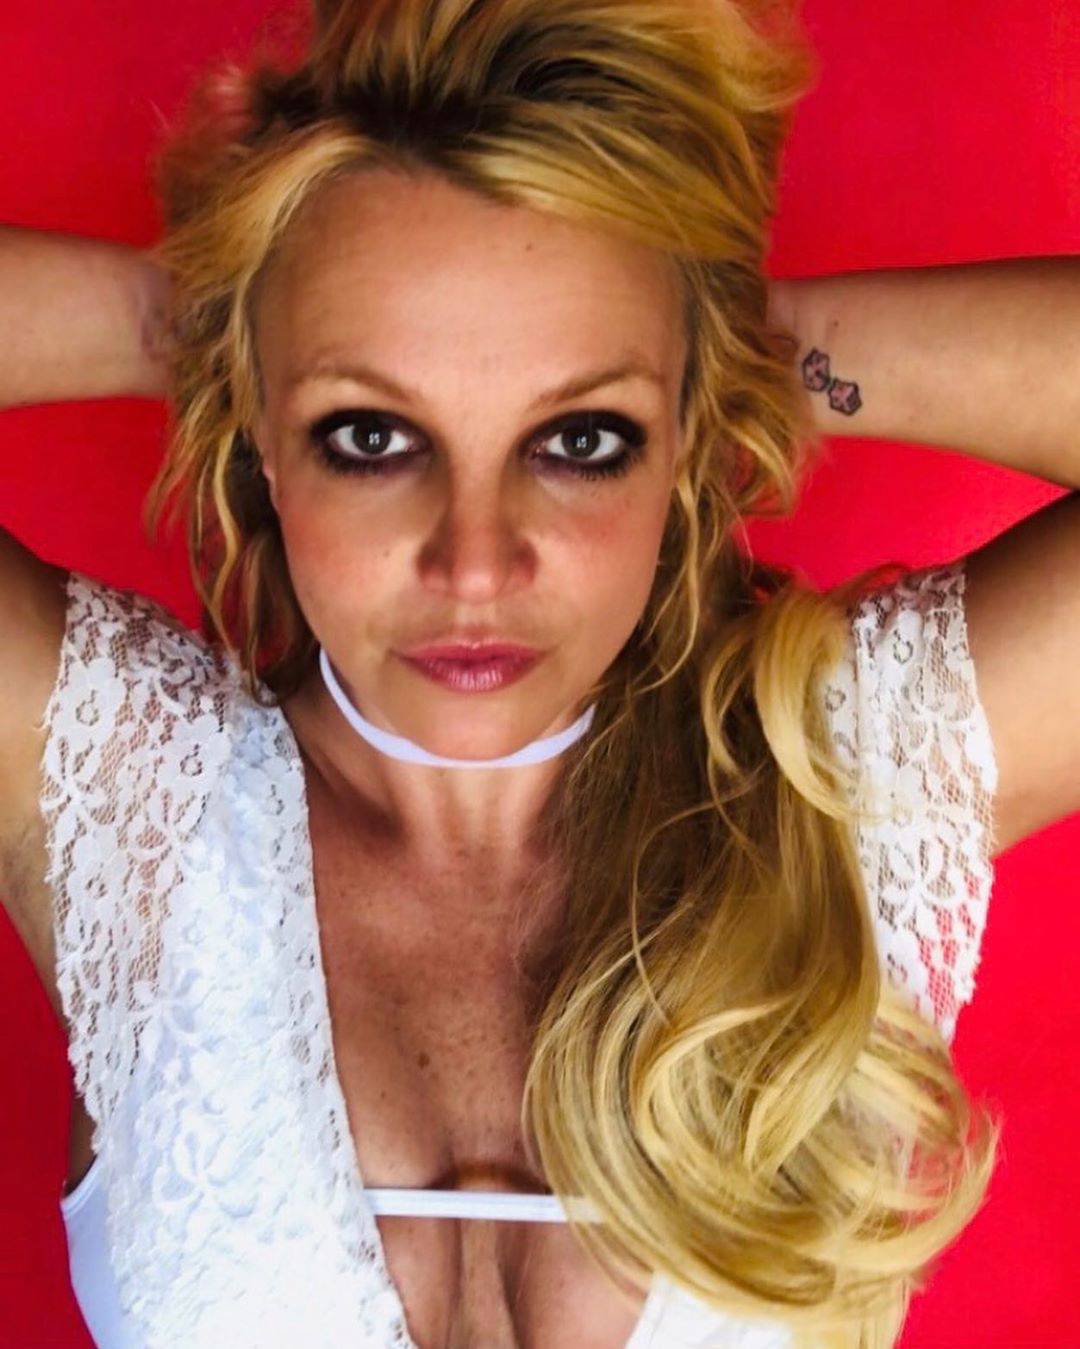 Britney zgrozila fotkom noktiju: 'Opet je posrnula, pomozite joj'